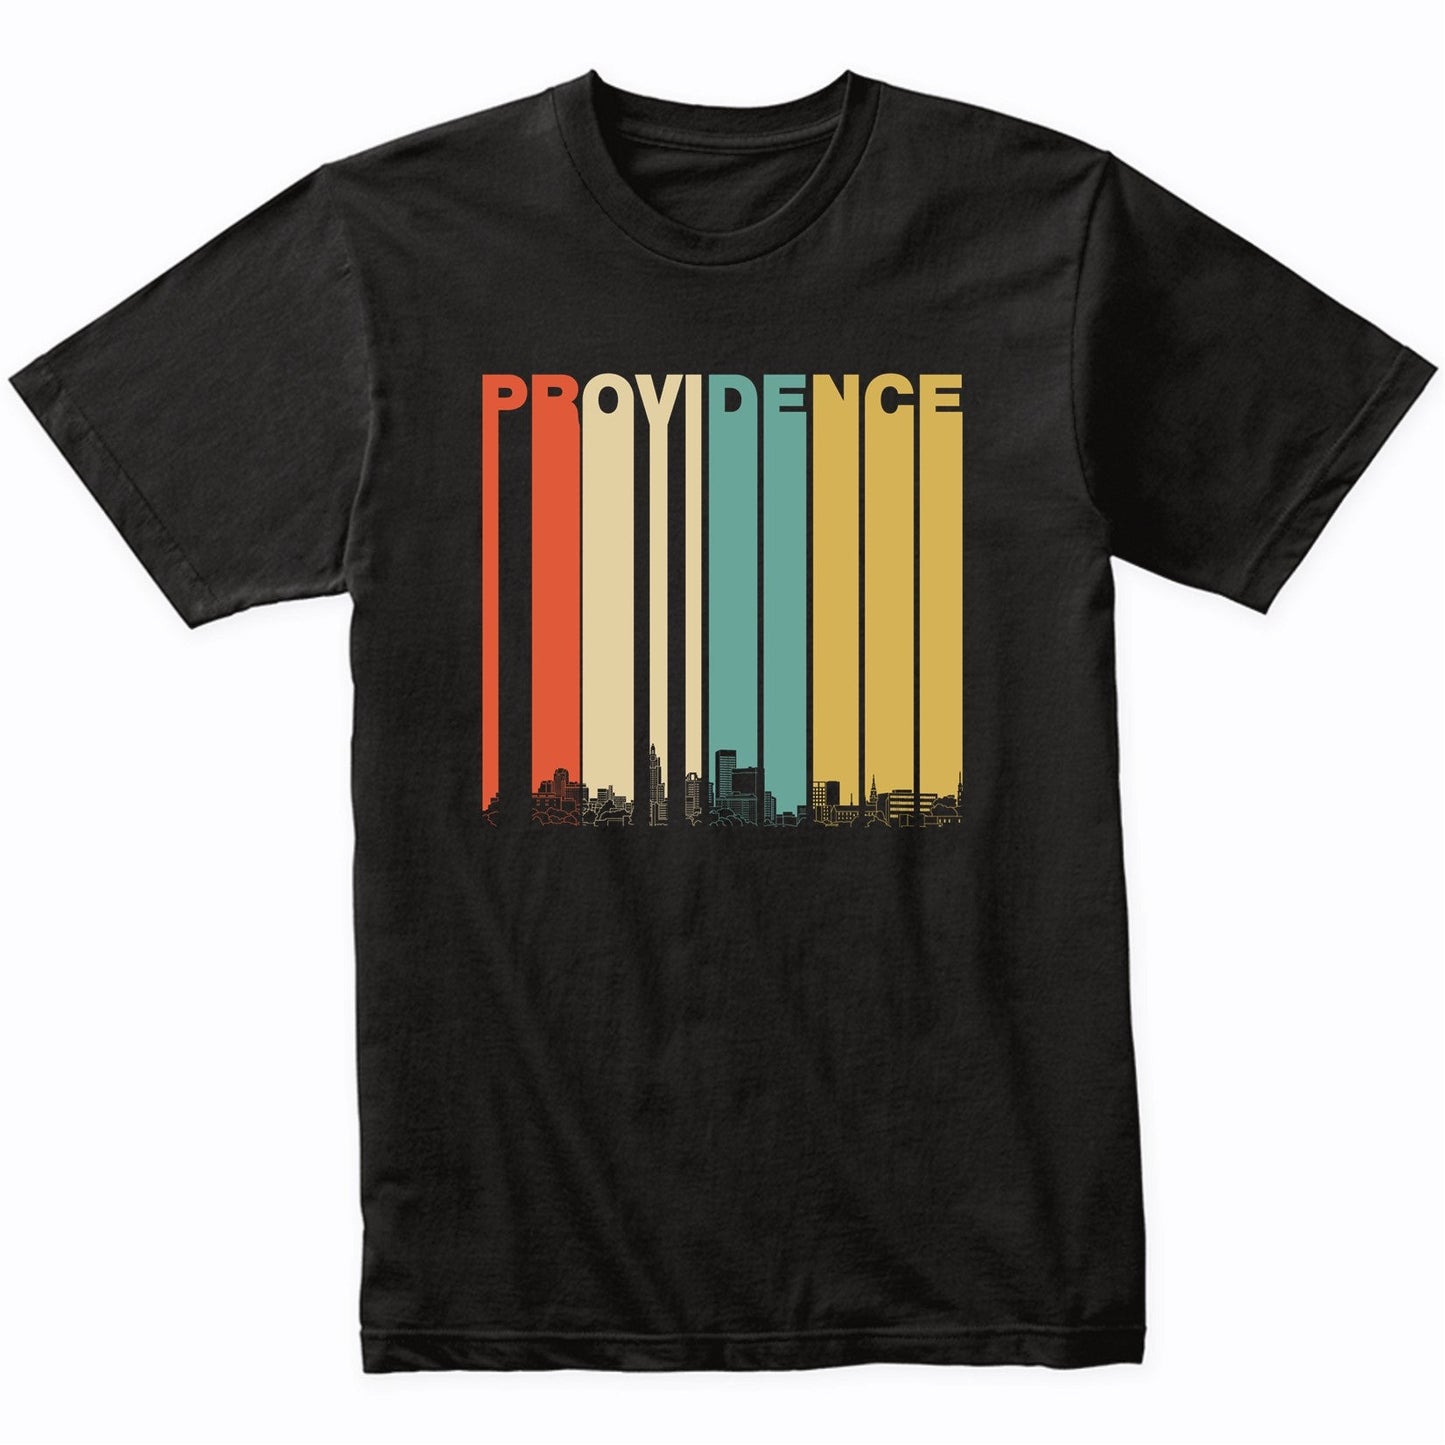 Vintage 1970's Style Providence Rhode Island Skyline T-Shirt